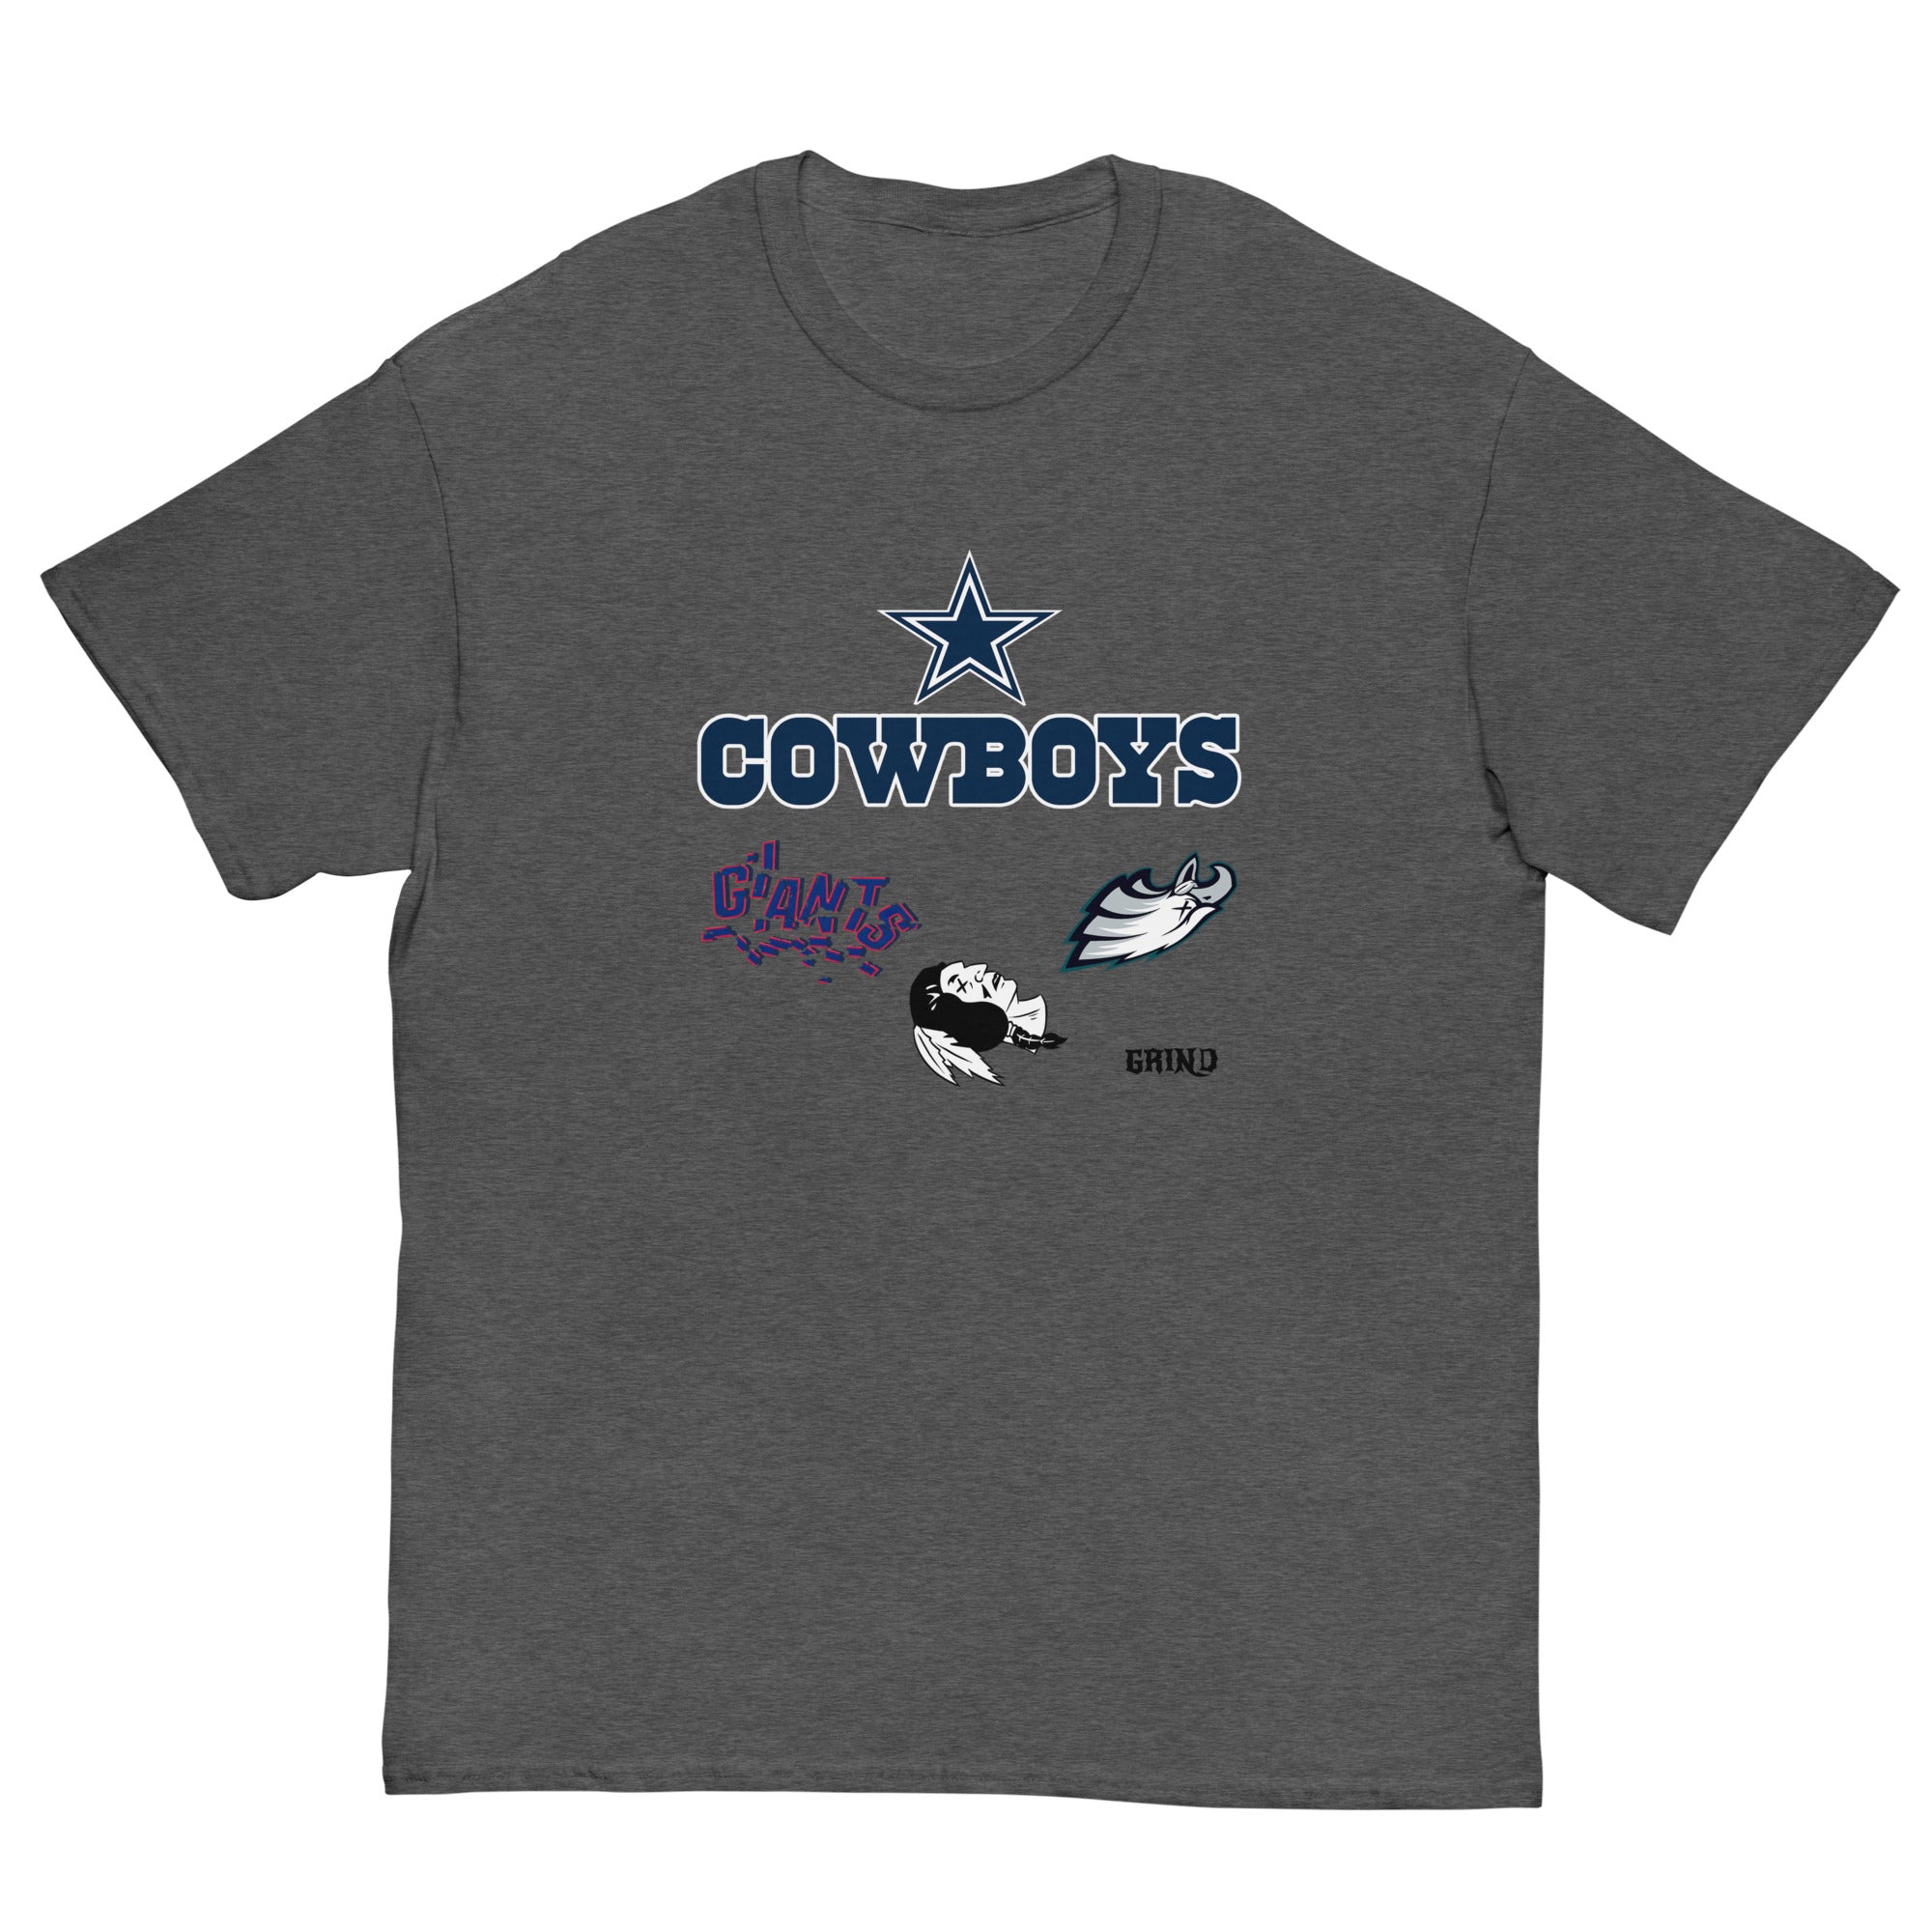 Cowboys "We run the East' Shirt